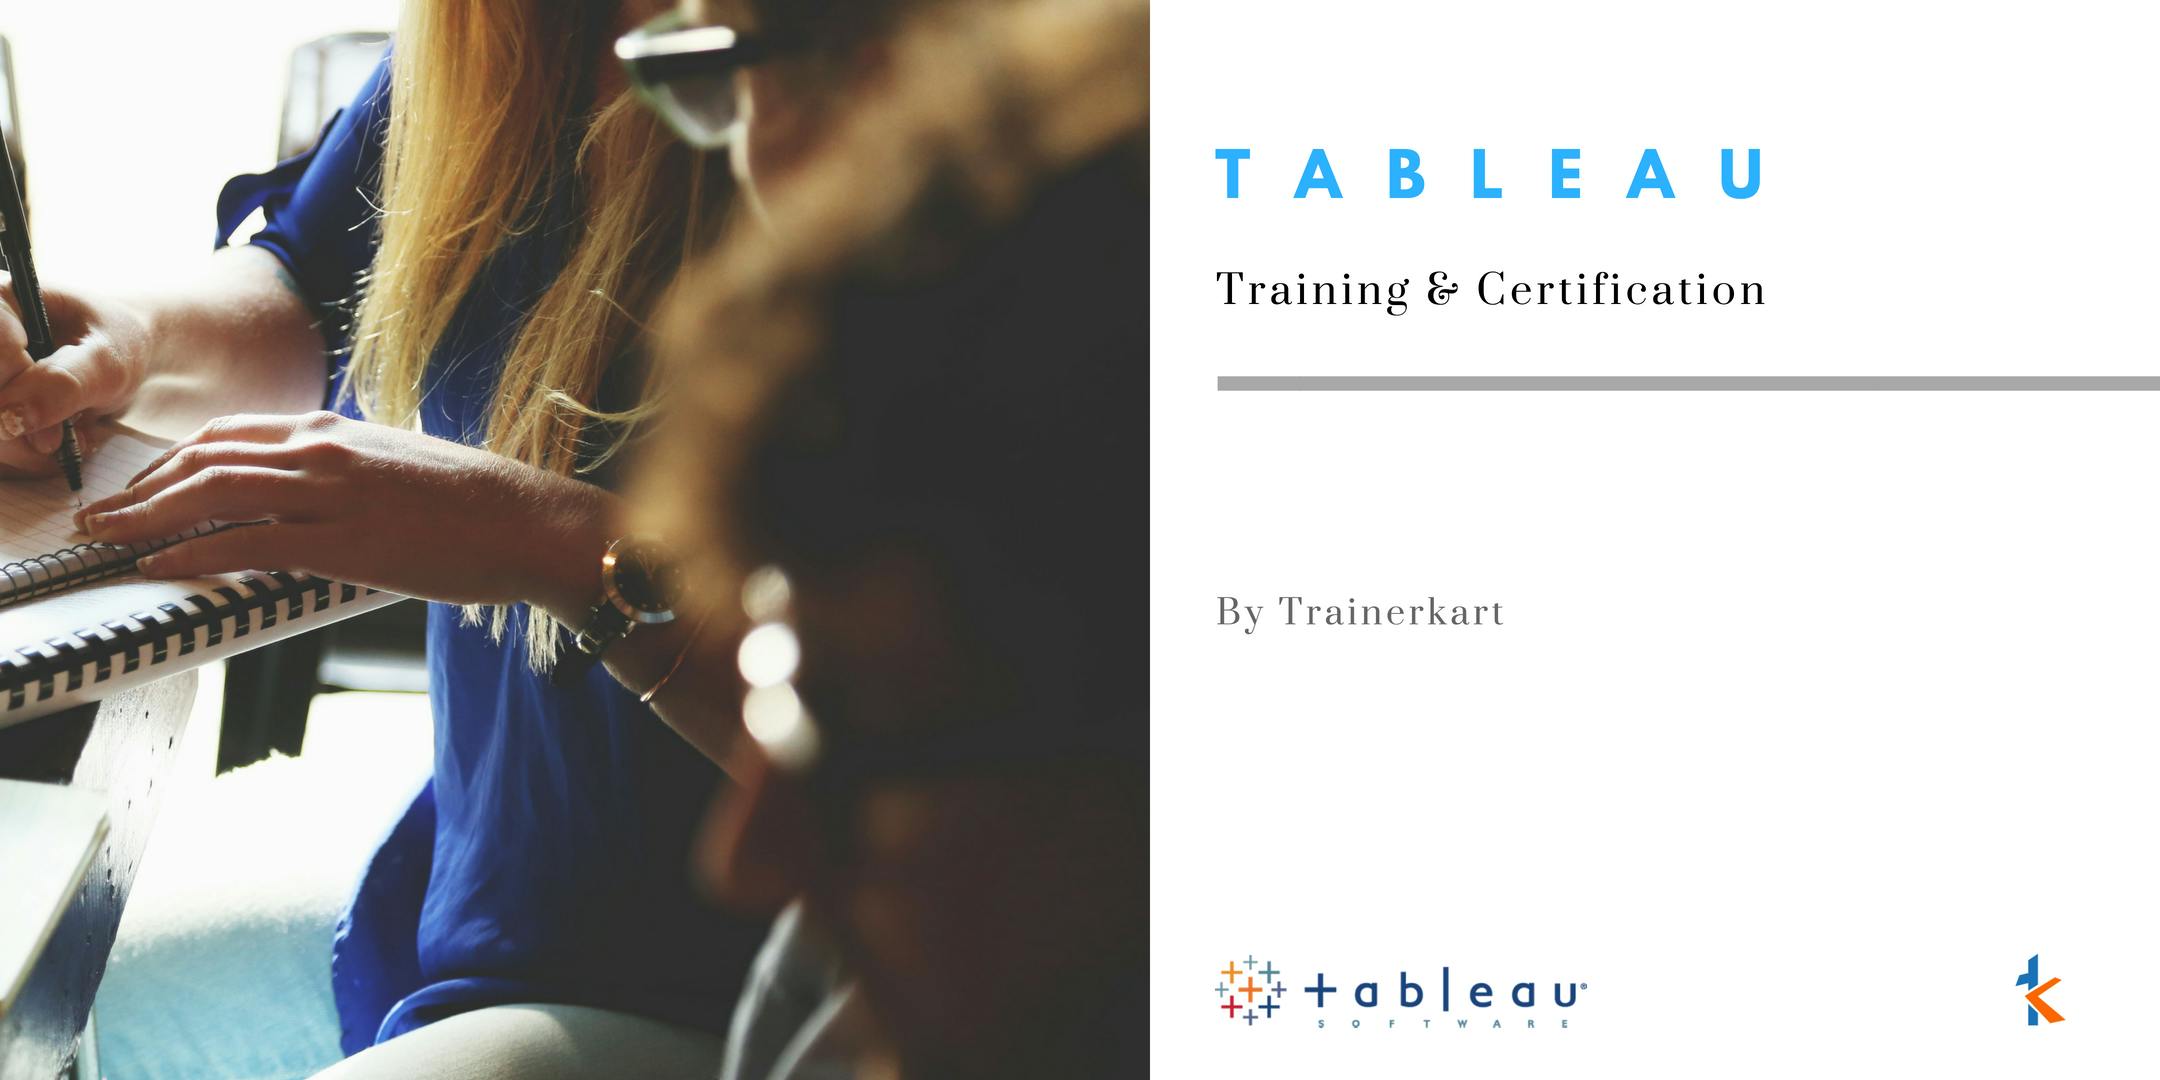 Tableau Training & Certification in Iowa City, IA